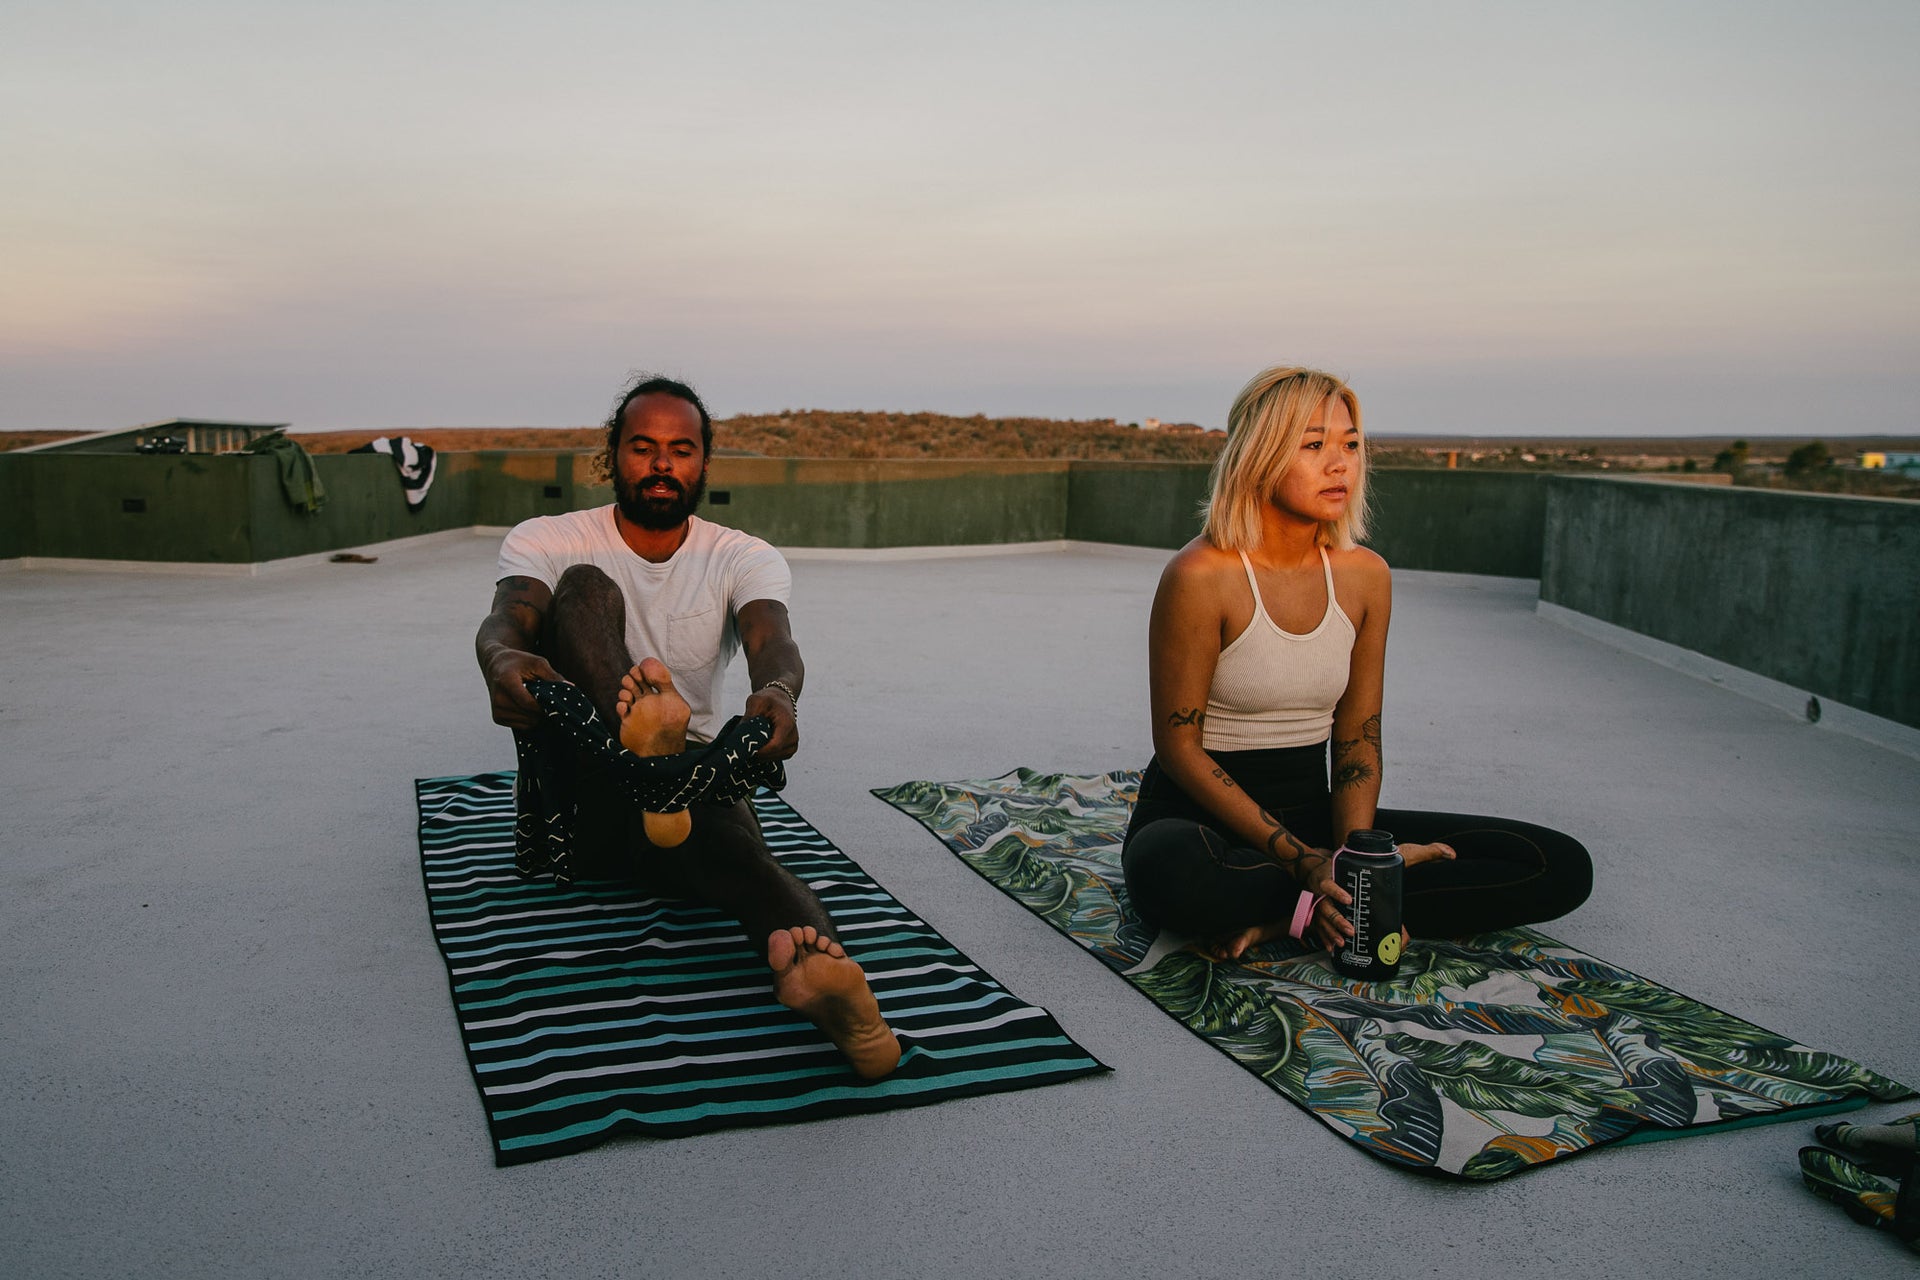 Carry Me Yoga Mat Sling  TRIBE Yoga – Tribe Yoga